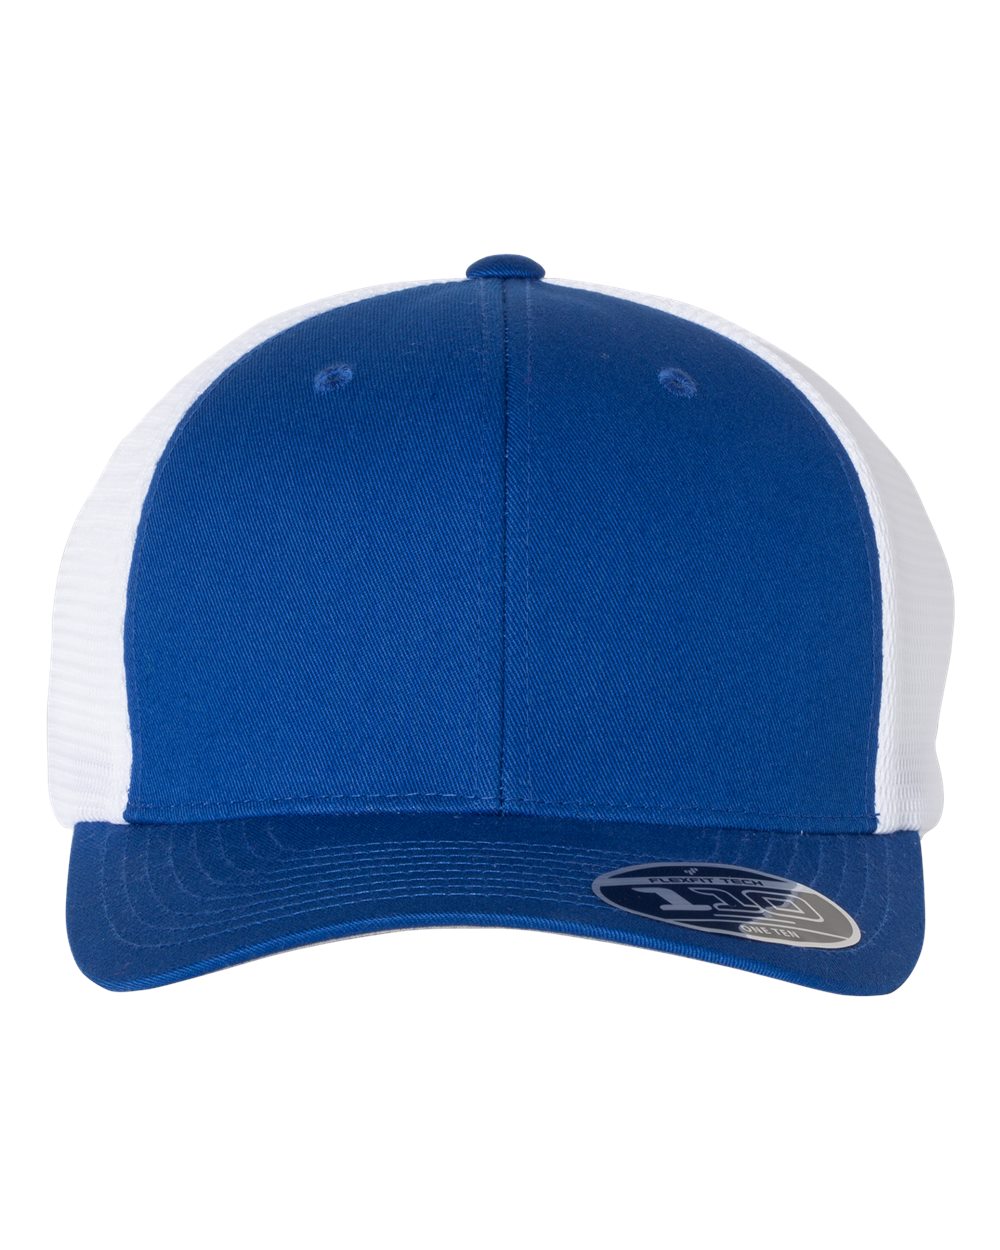 Flexfit Garment Washed Cap, Low Profile, White, Large / X-Large at   Men's Clothing store: Baseball Caps